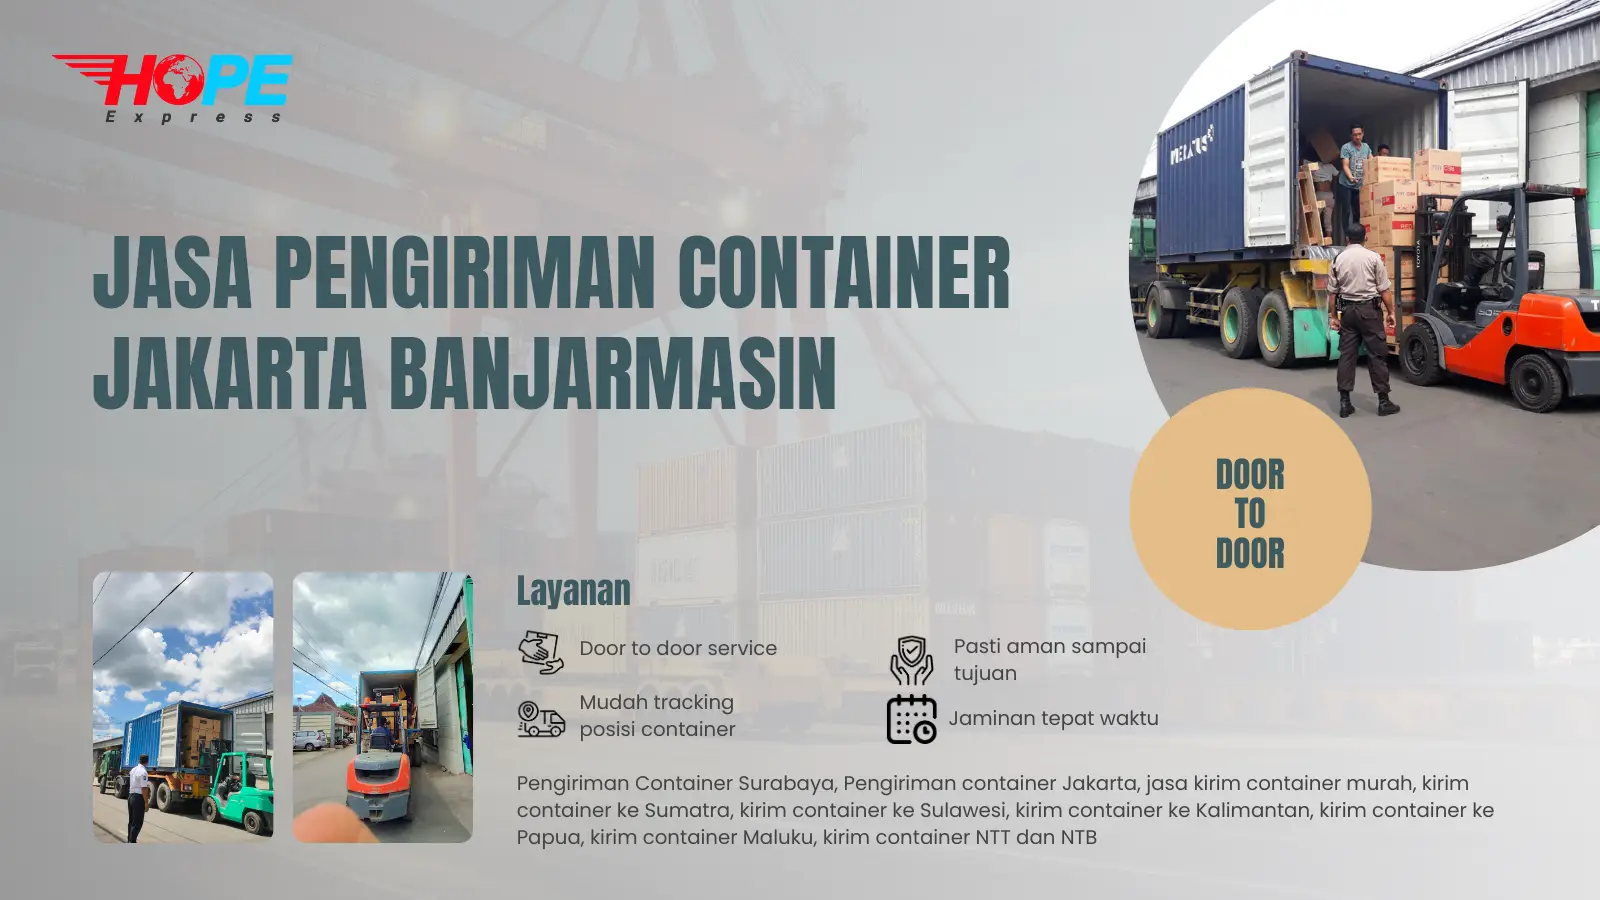 Jasa Pengiriman Container Jakarta Banjarmasin